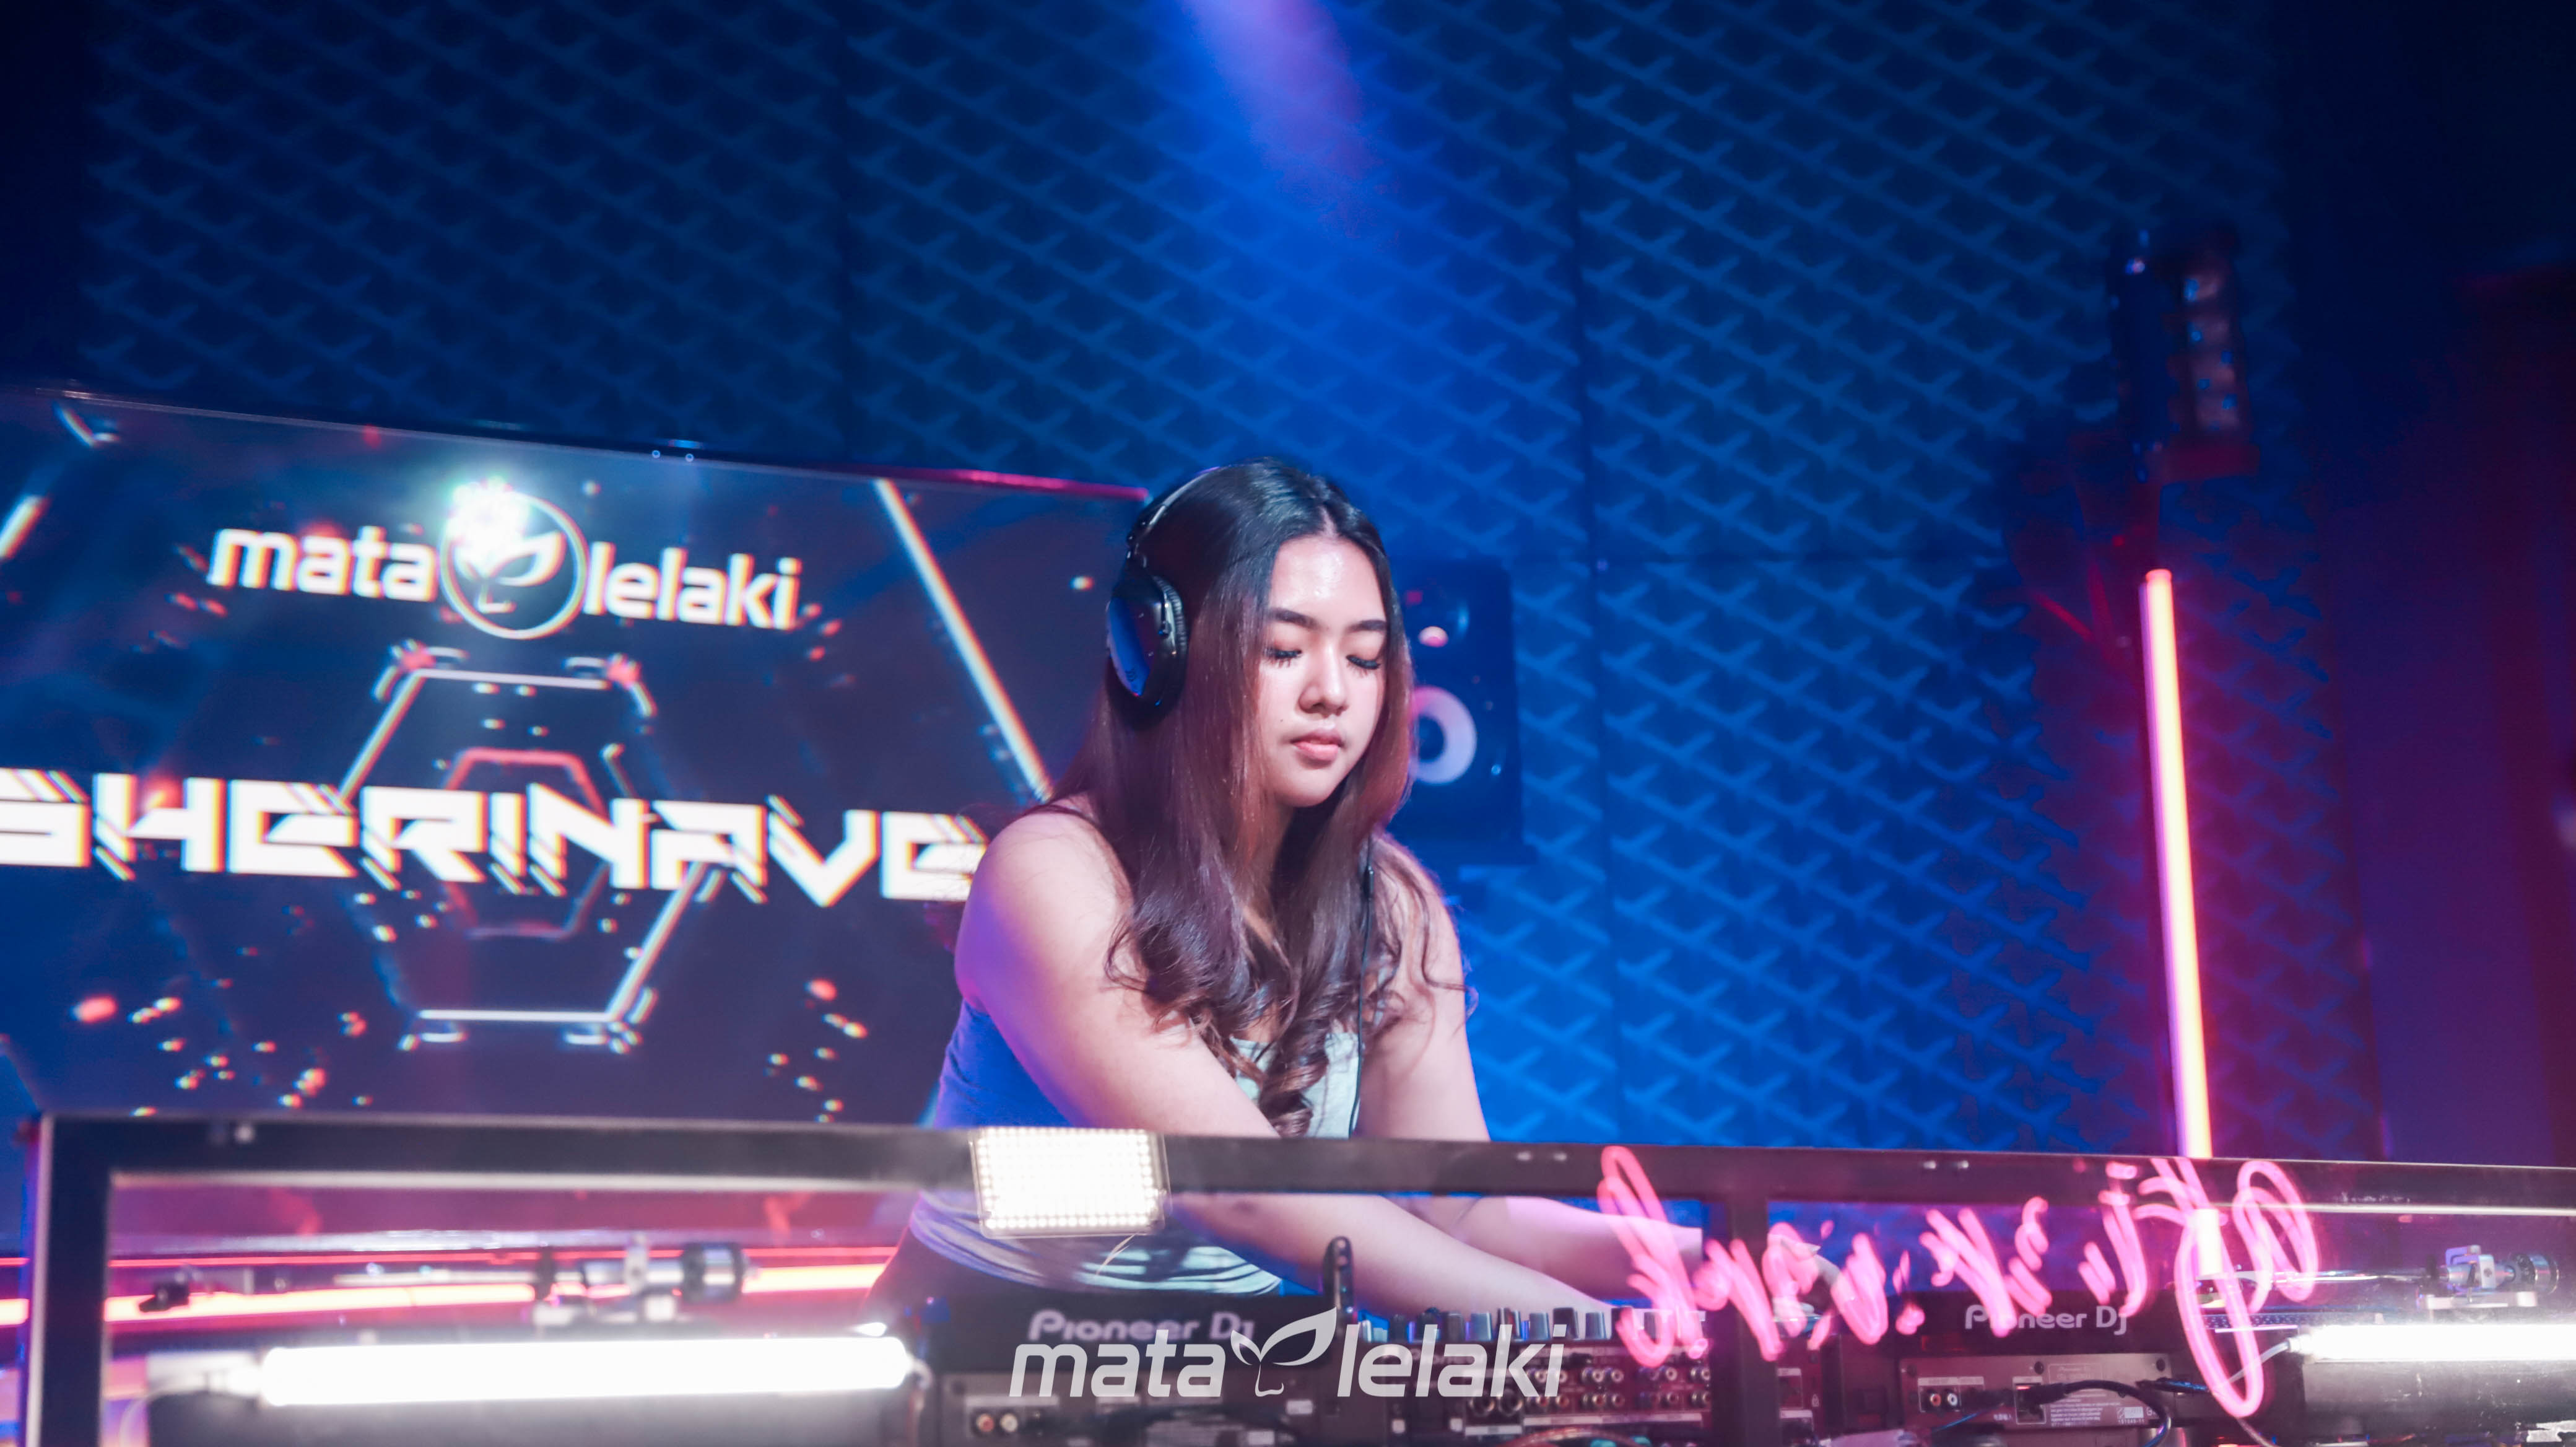 DJ Sherinave Perform at Studio Matalelaki